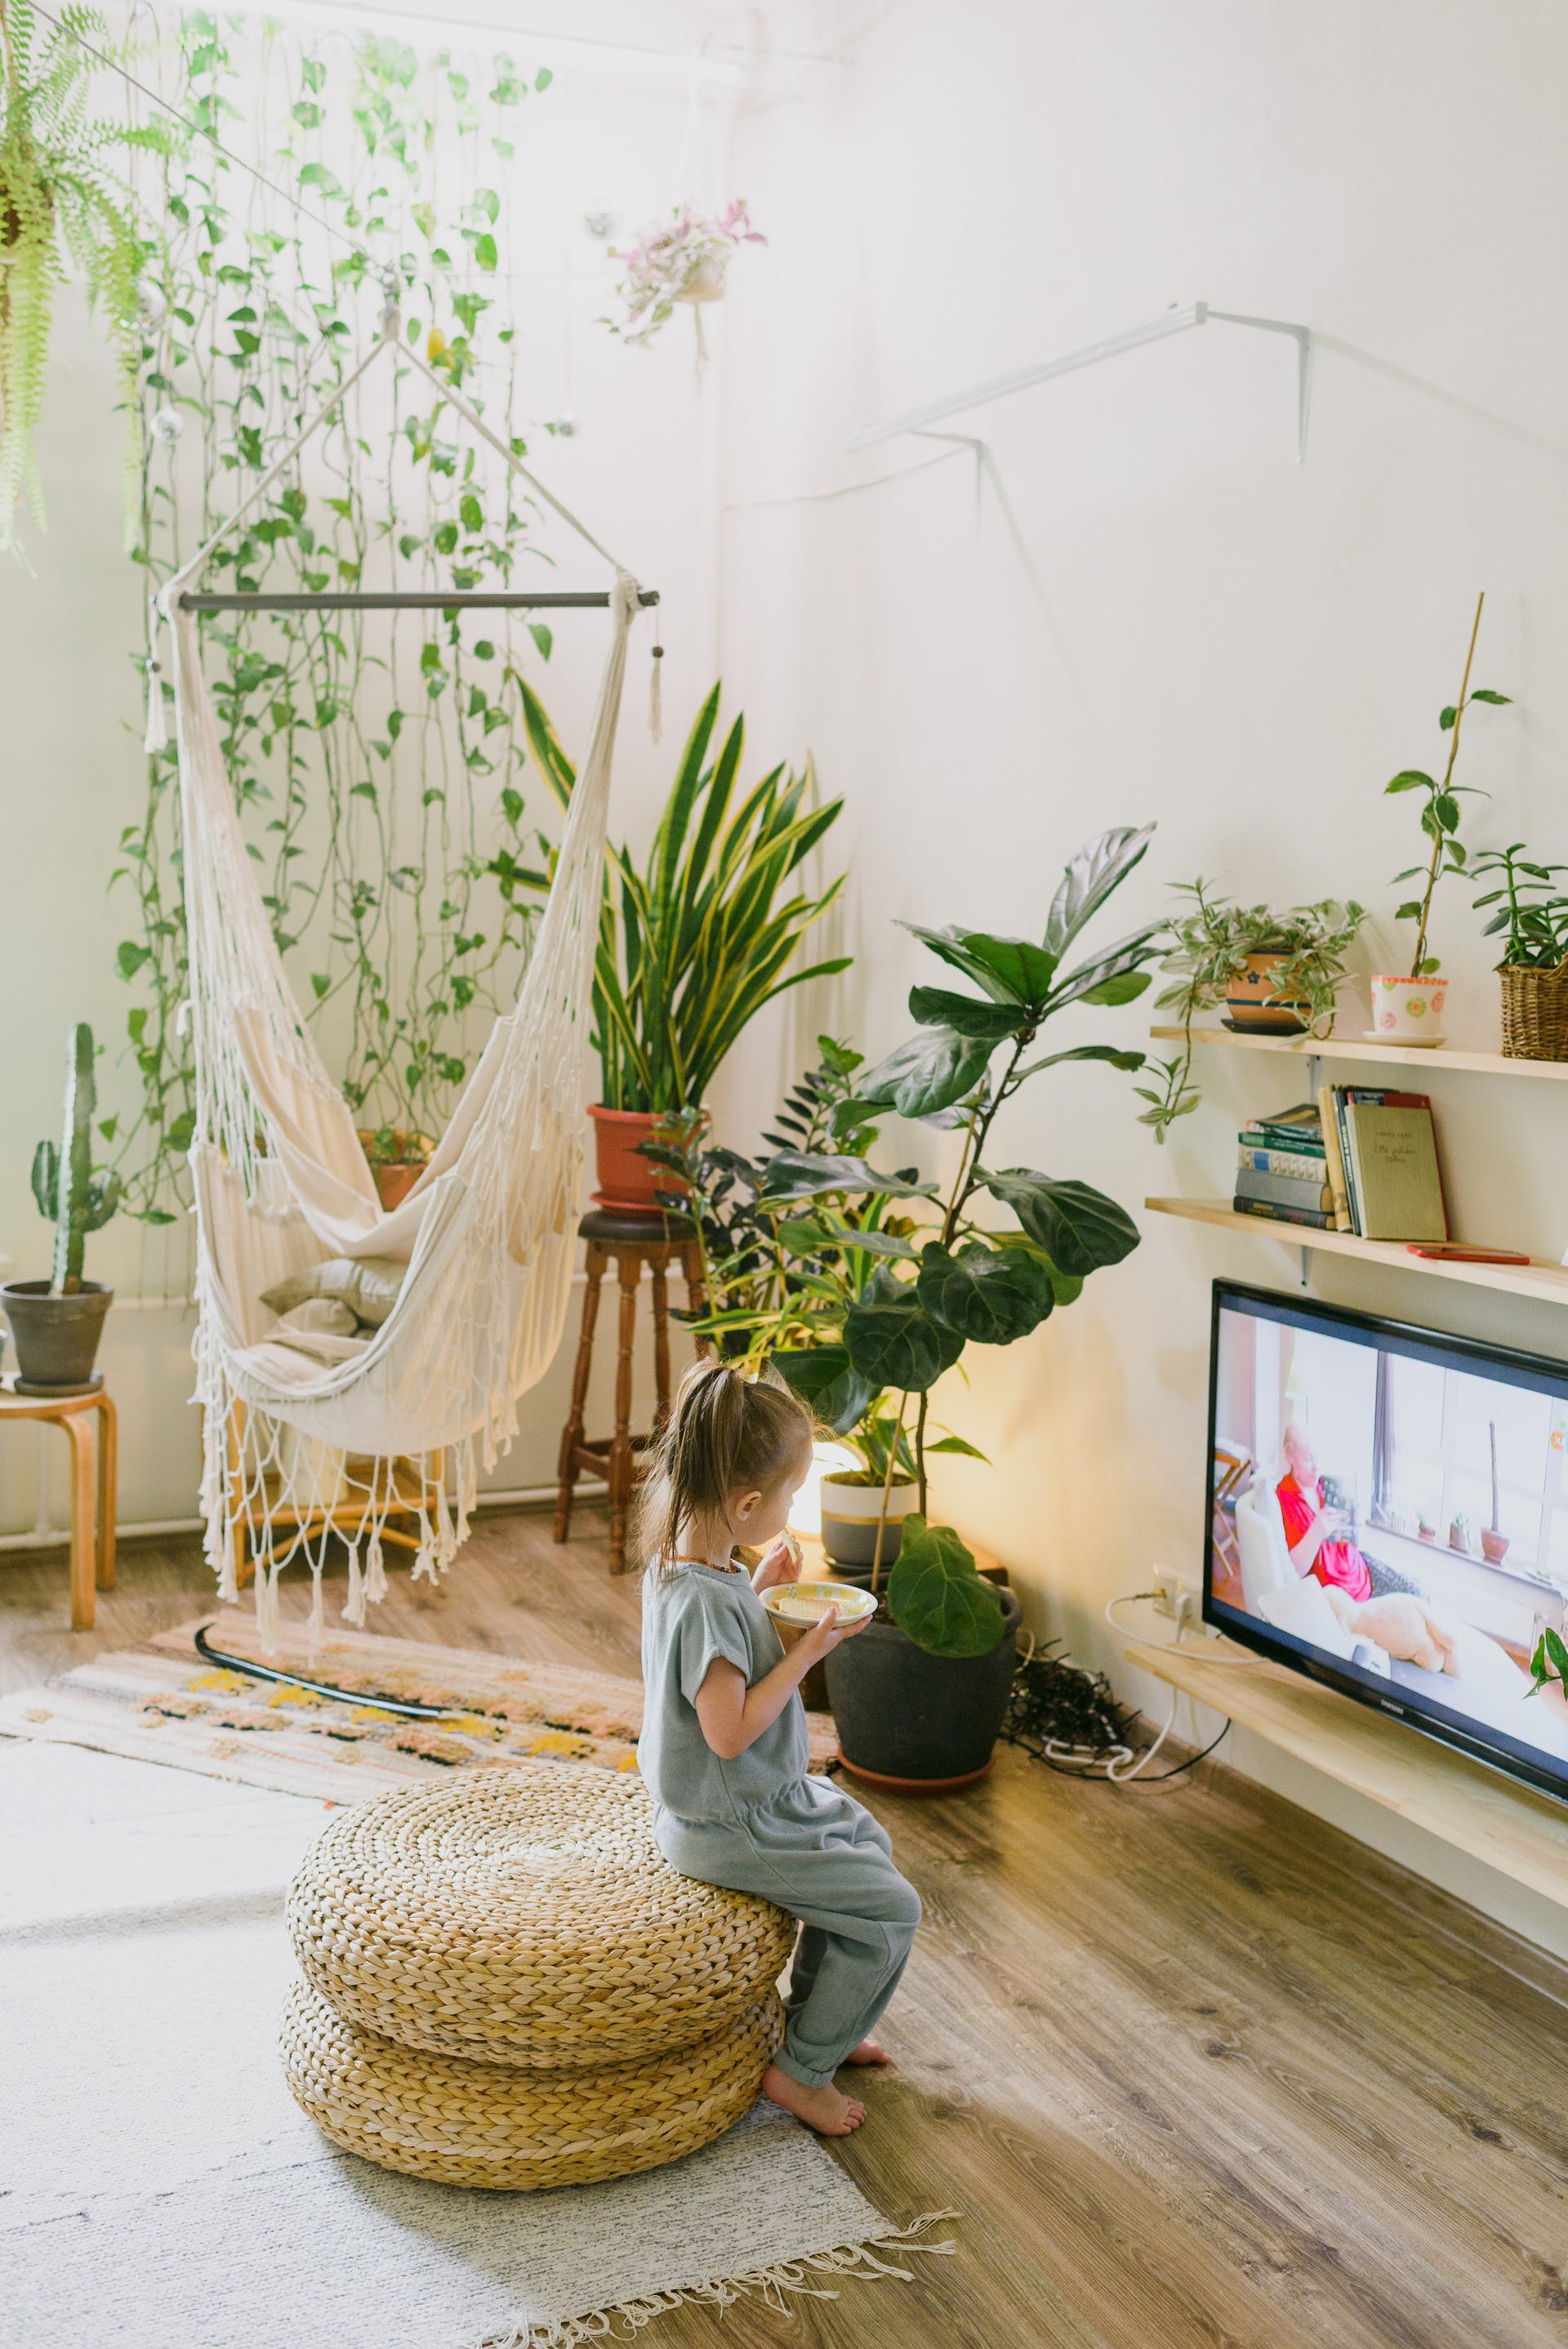 Child watching tv | Source: Pexels